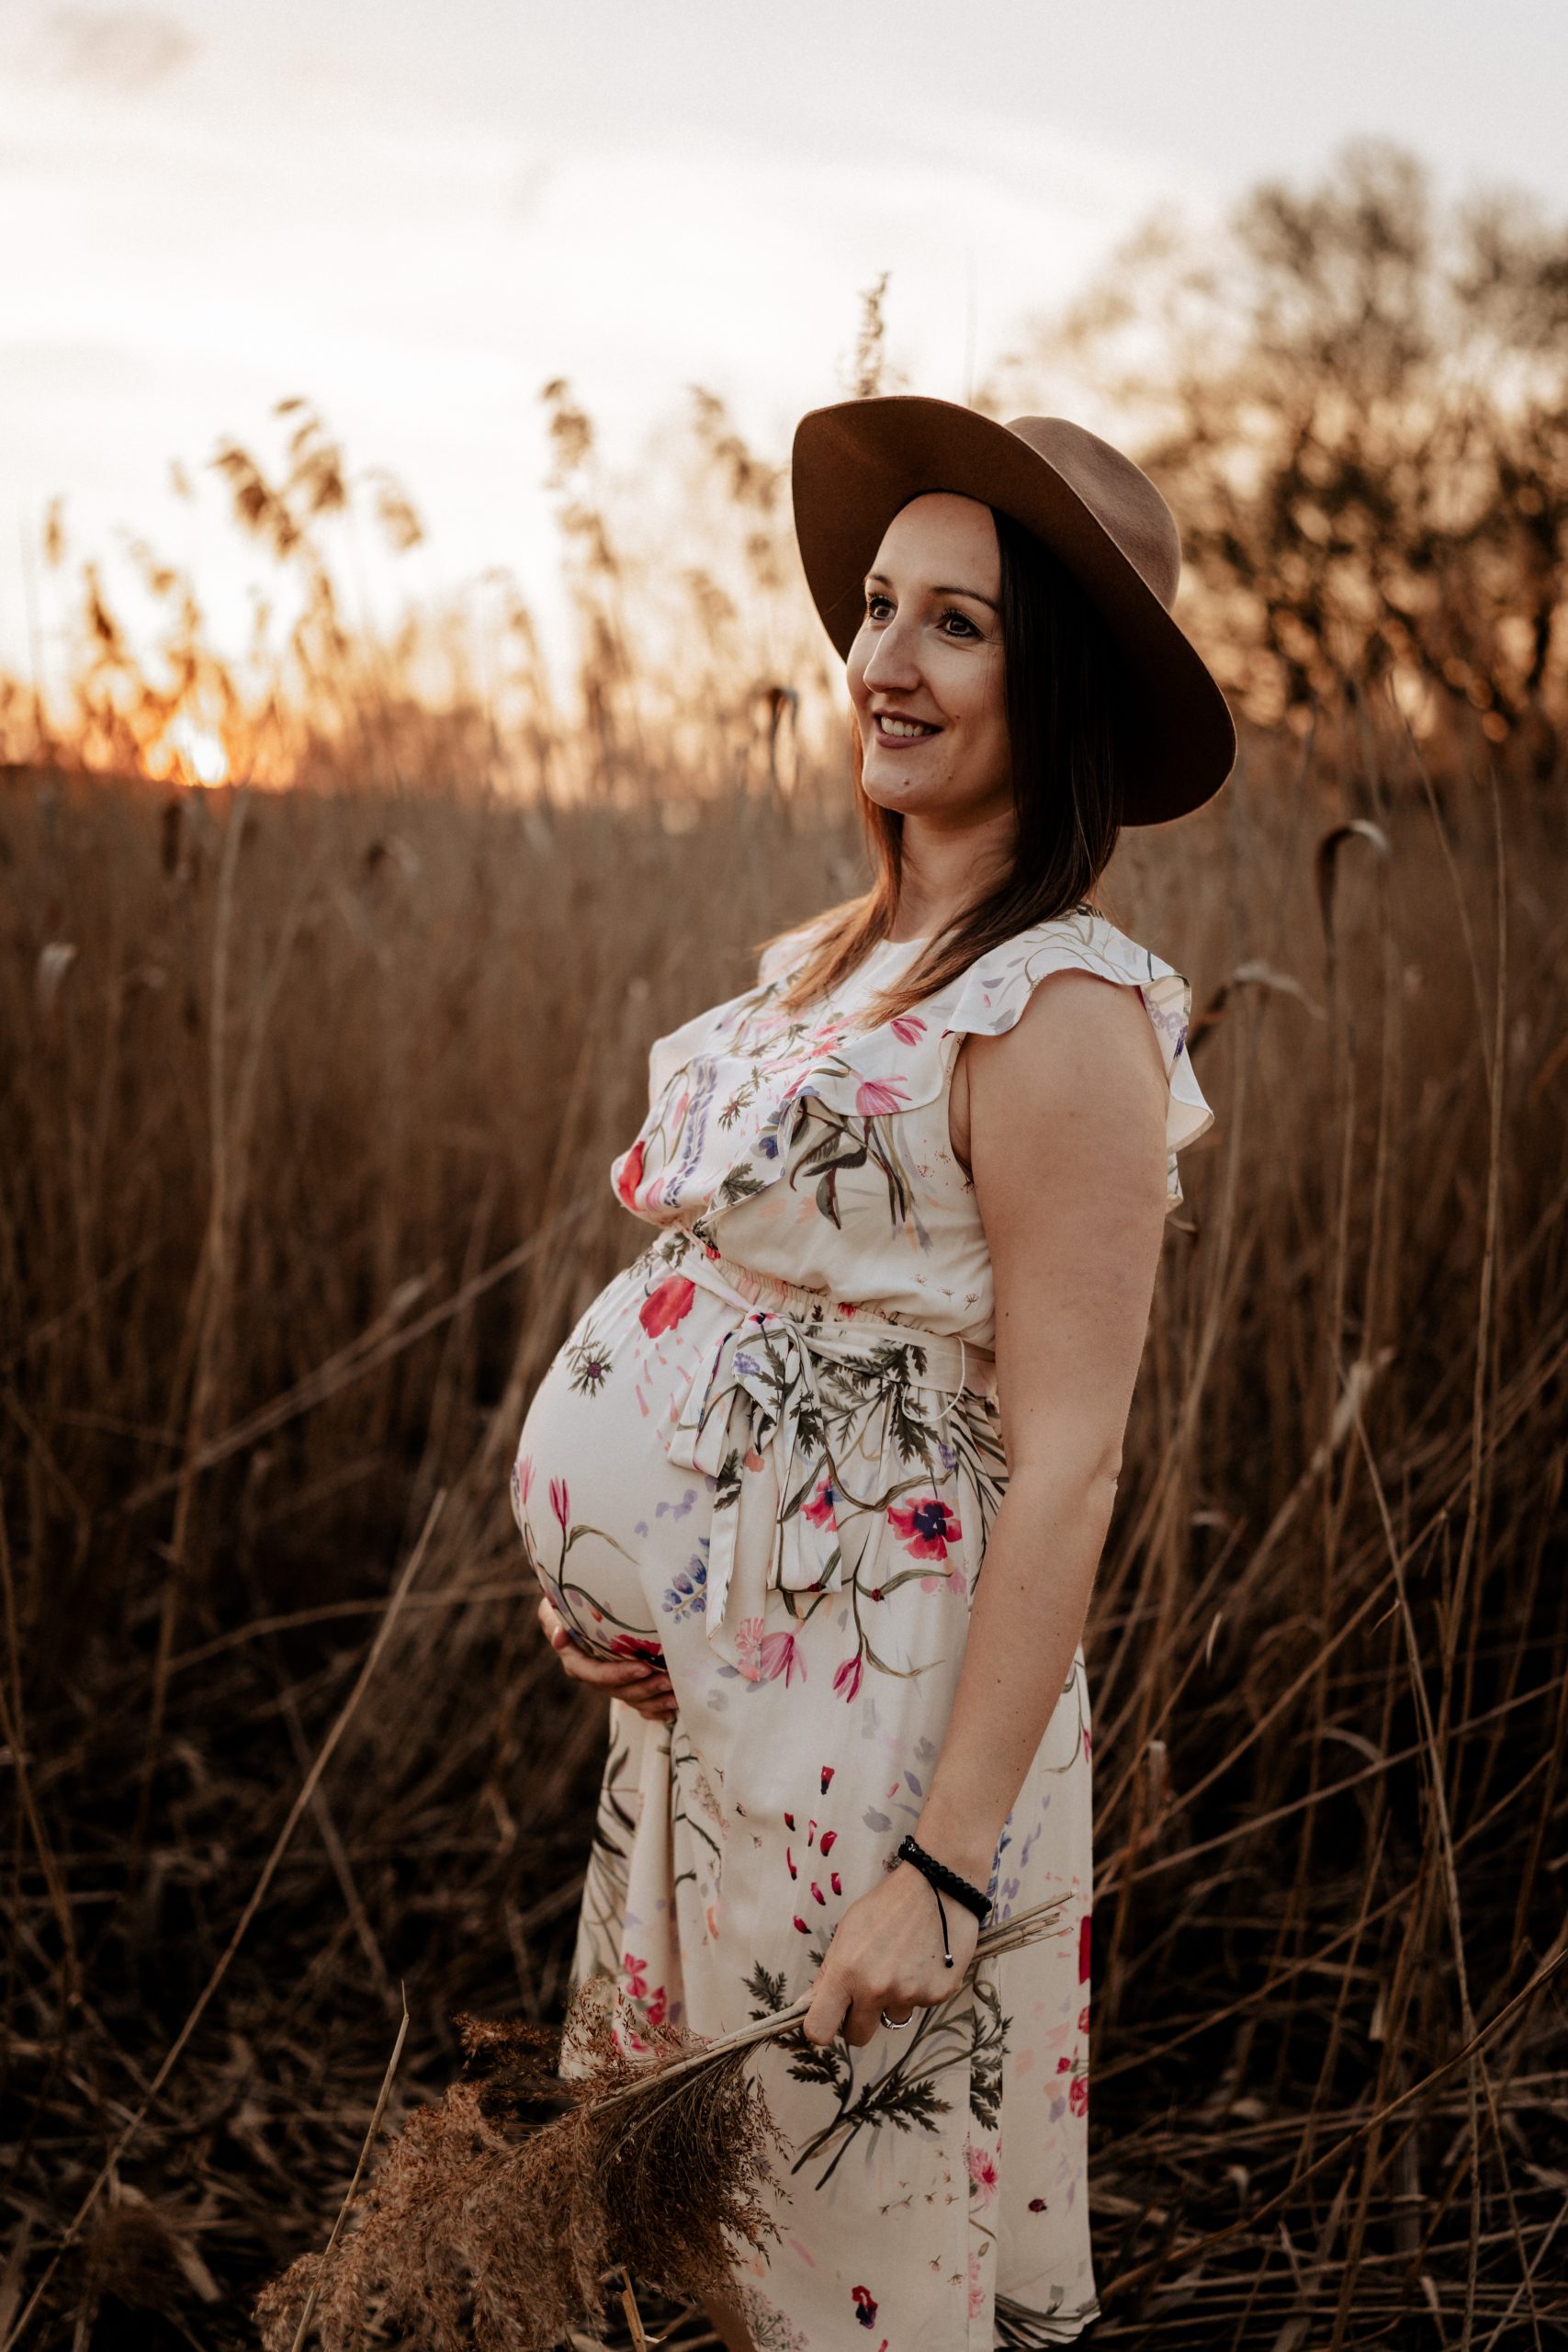 fotograf fotografiert schwangere Frau im Schilffeld